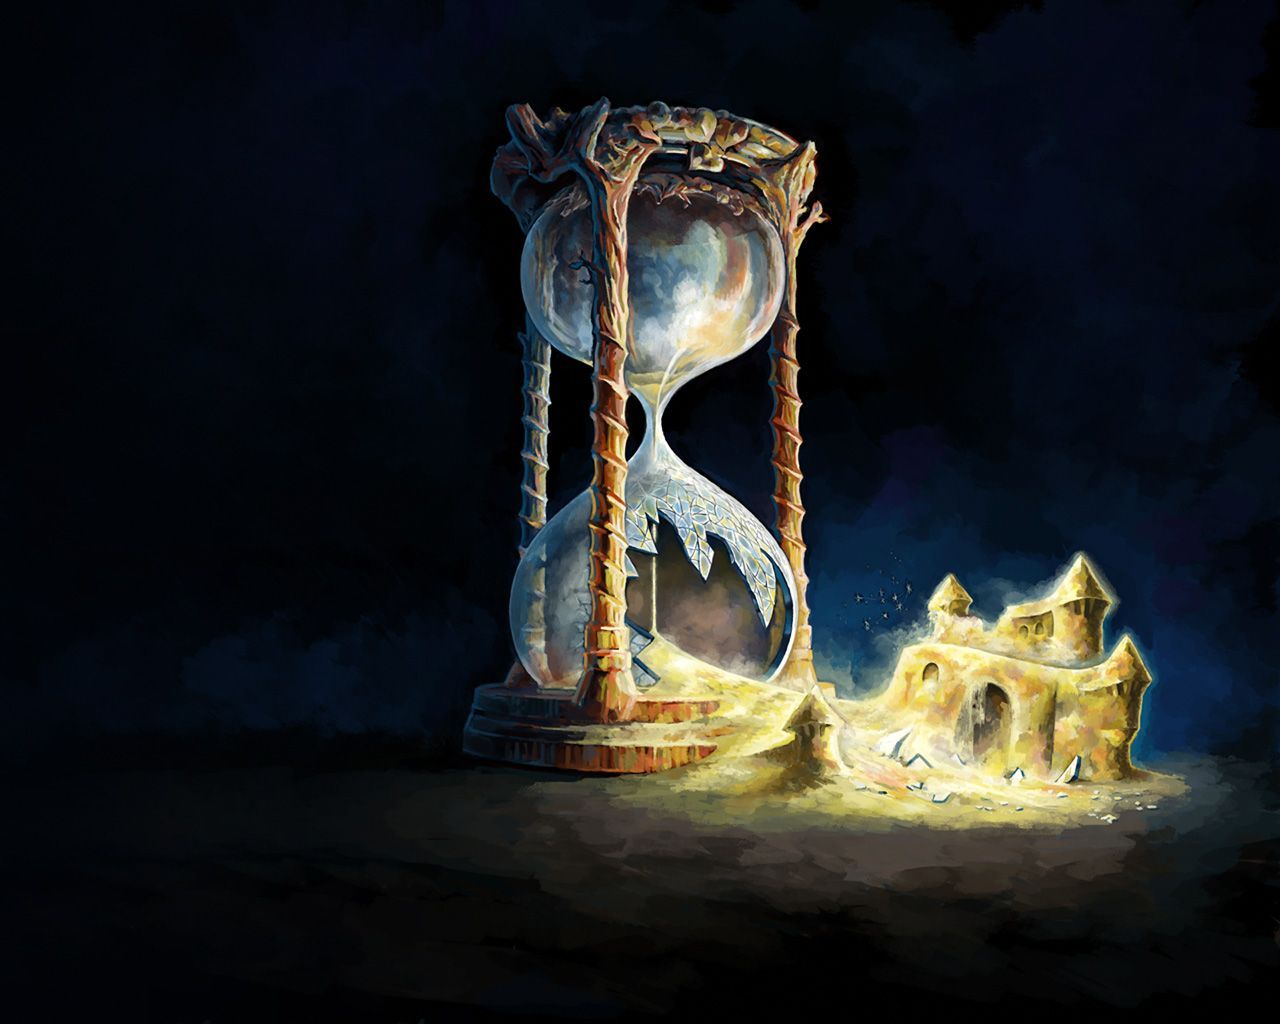 Fantasy Artistic Video Game Wallpaper. Hourglass, Braid video game